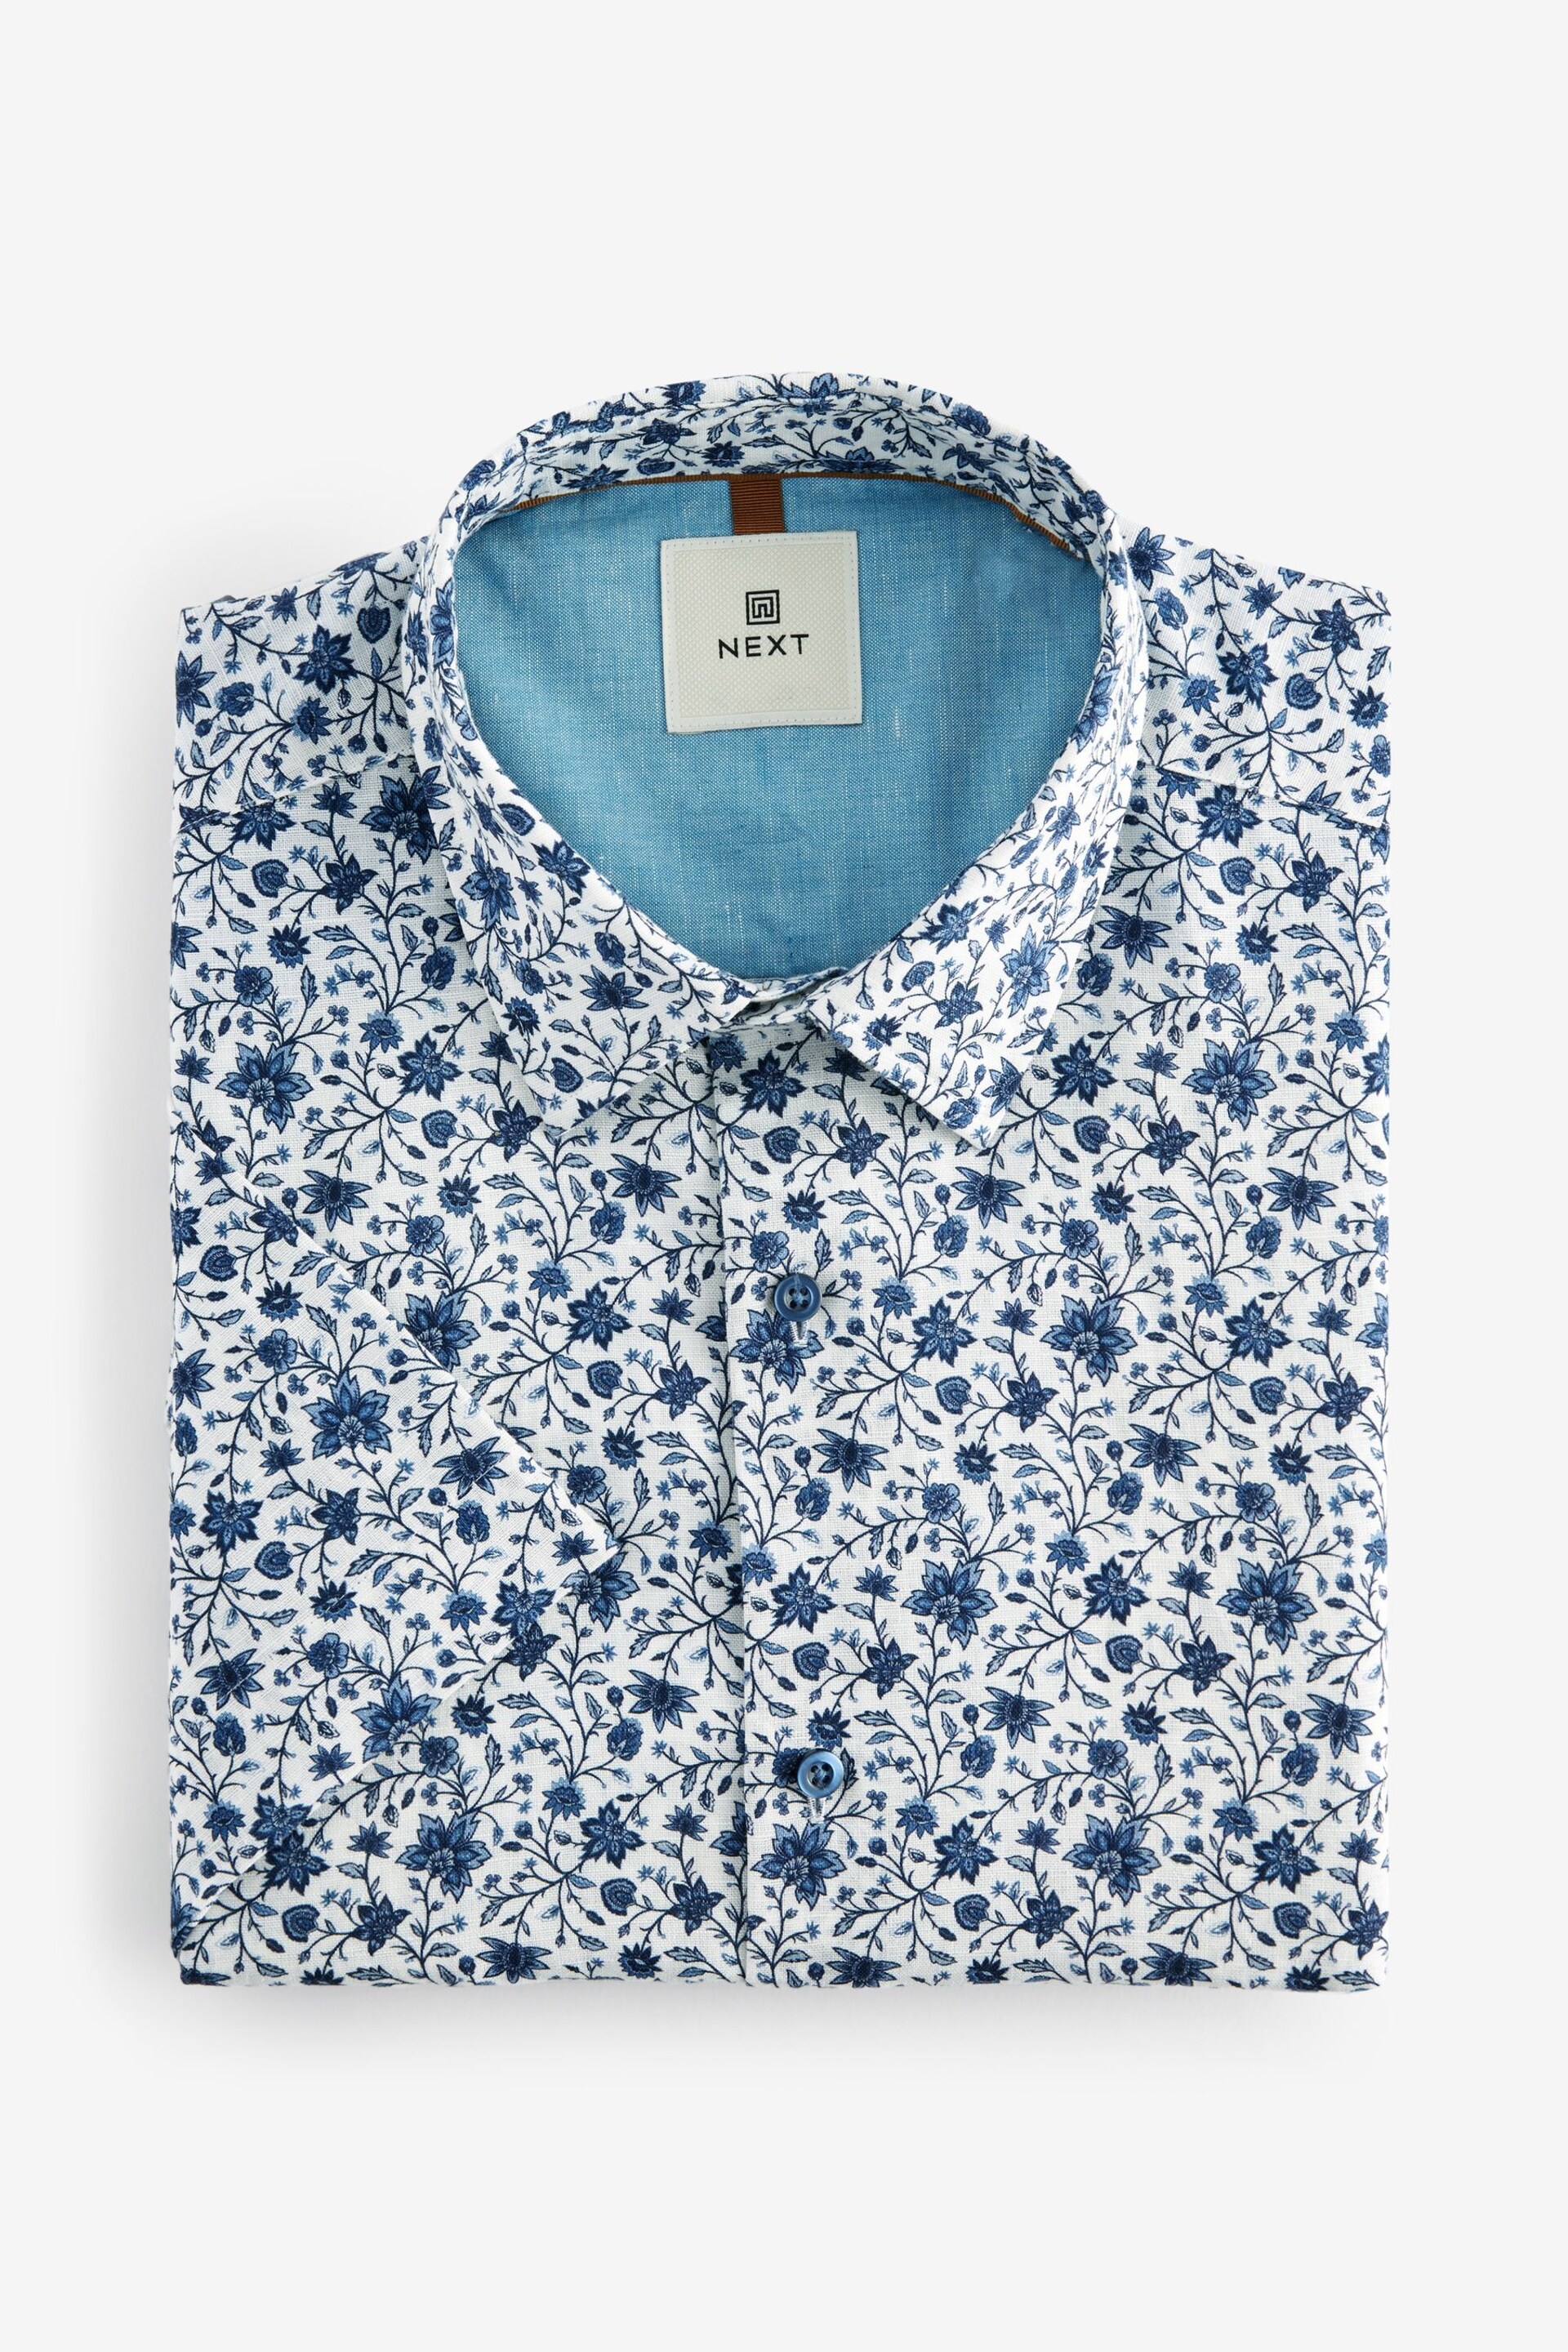 White/Blue Floral Printed Linen Blend Shirt - Image 5 of 7